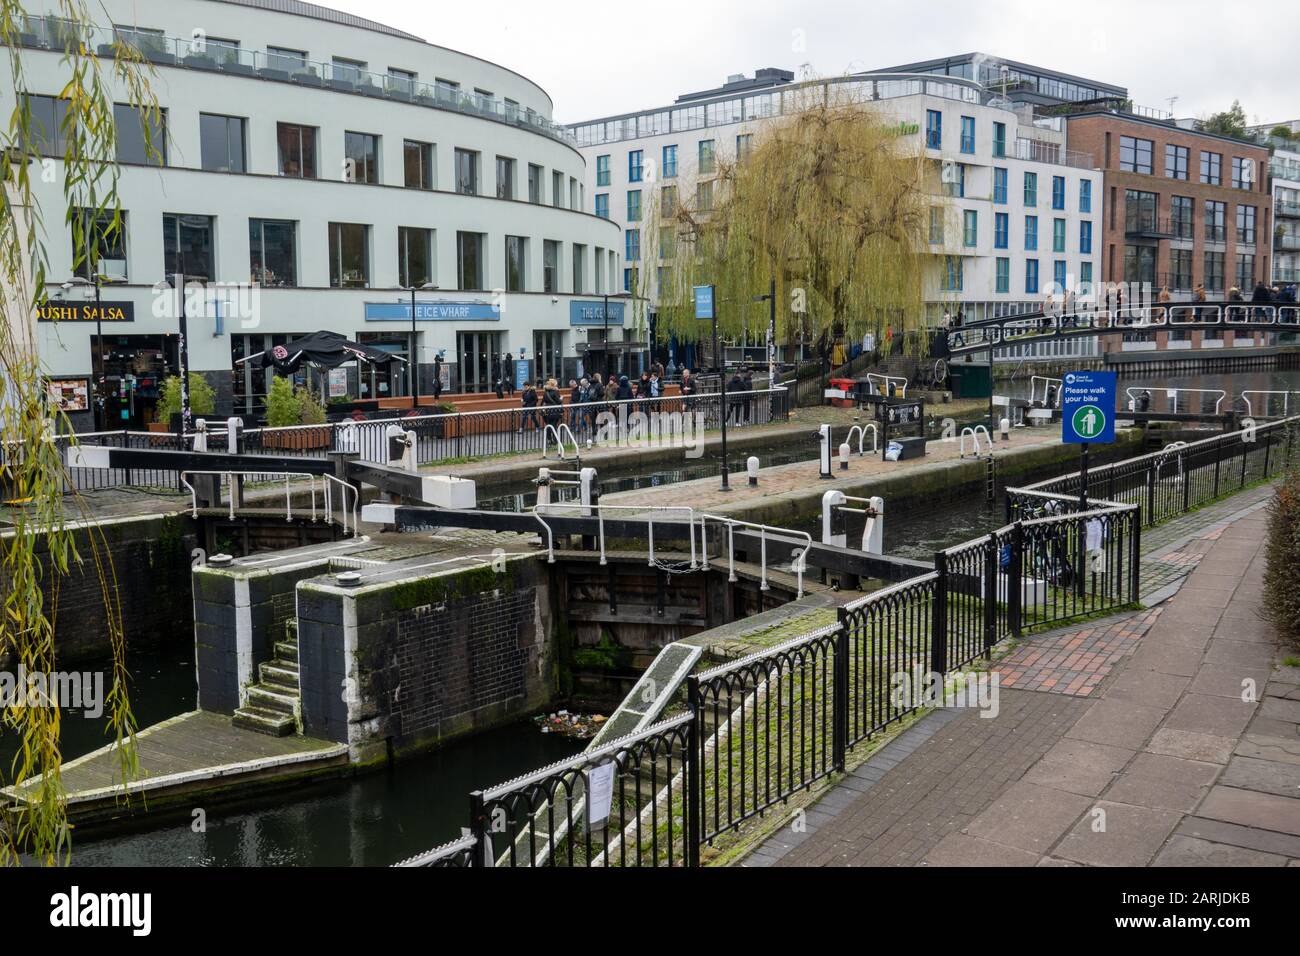 Hampstead Road Lock, Regents Canal, Camden Market, Londres, Royaume-Uni Banque D'Images